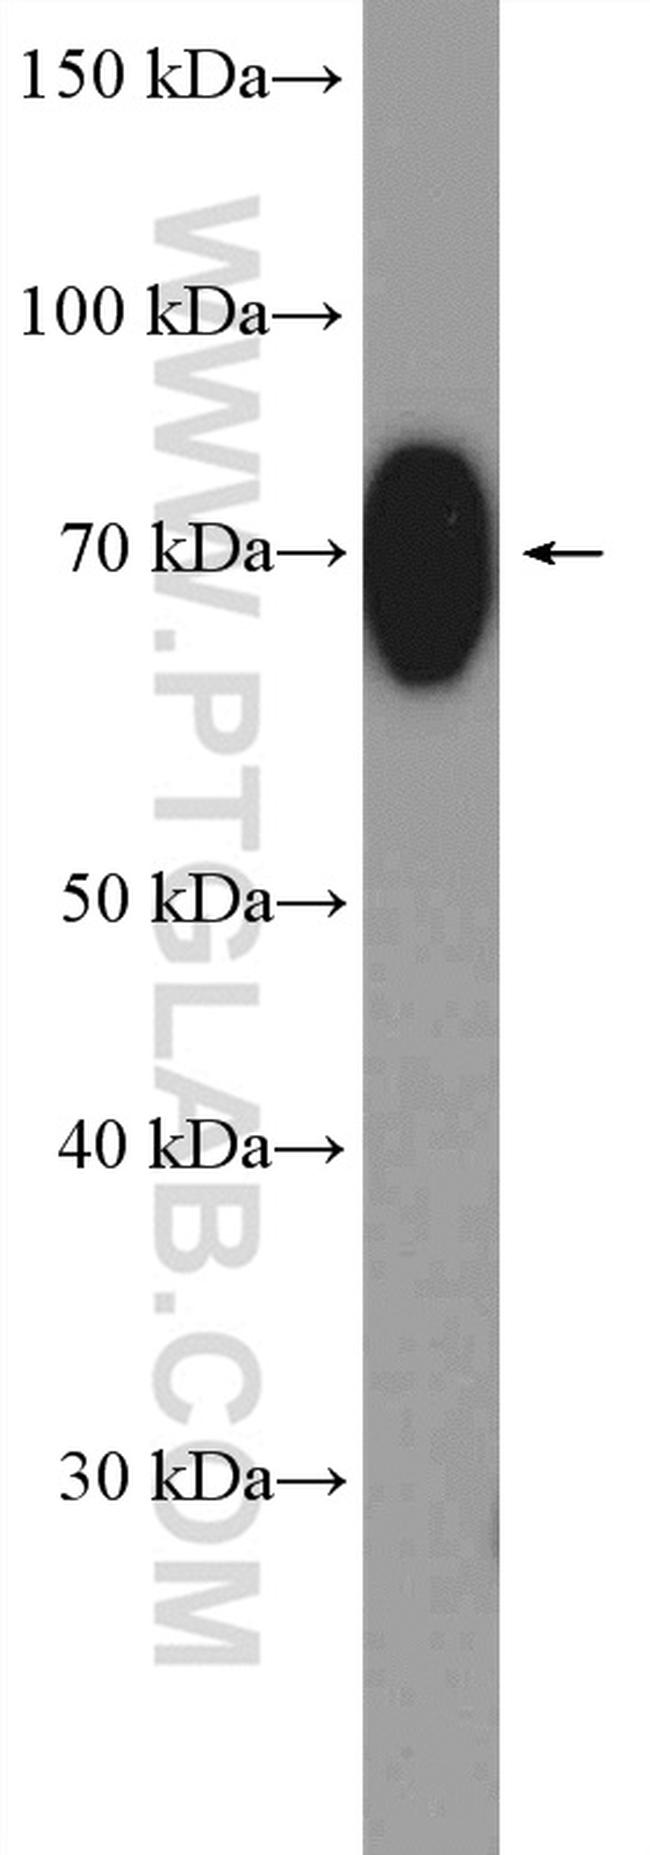 HSPA1L Antibody in Western Blot (WB)